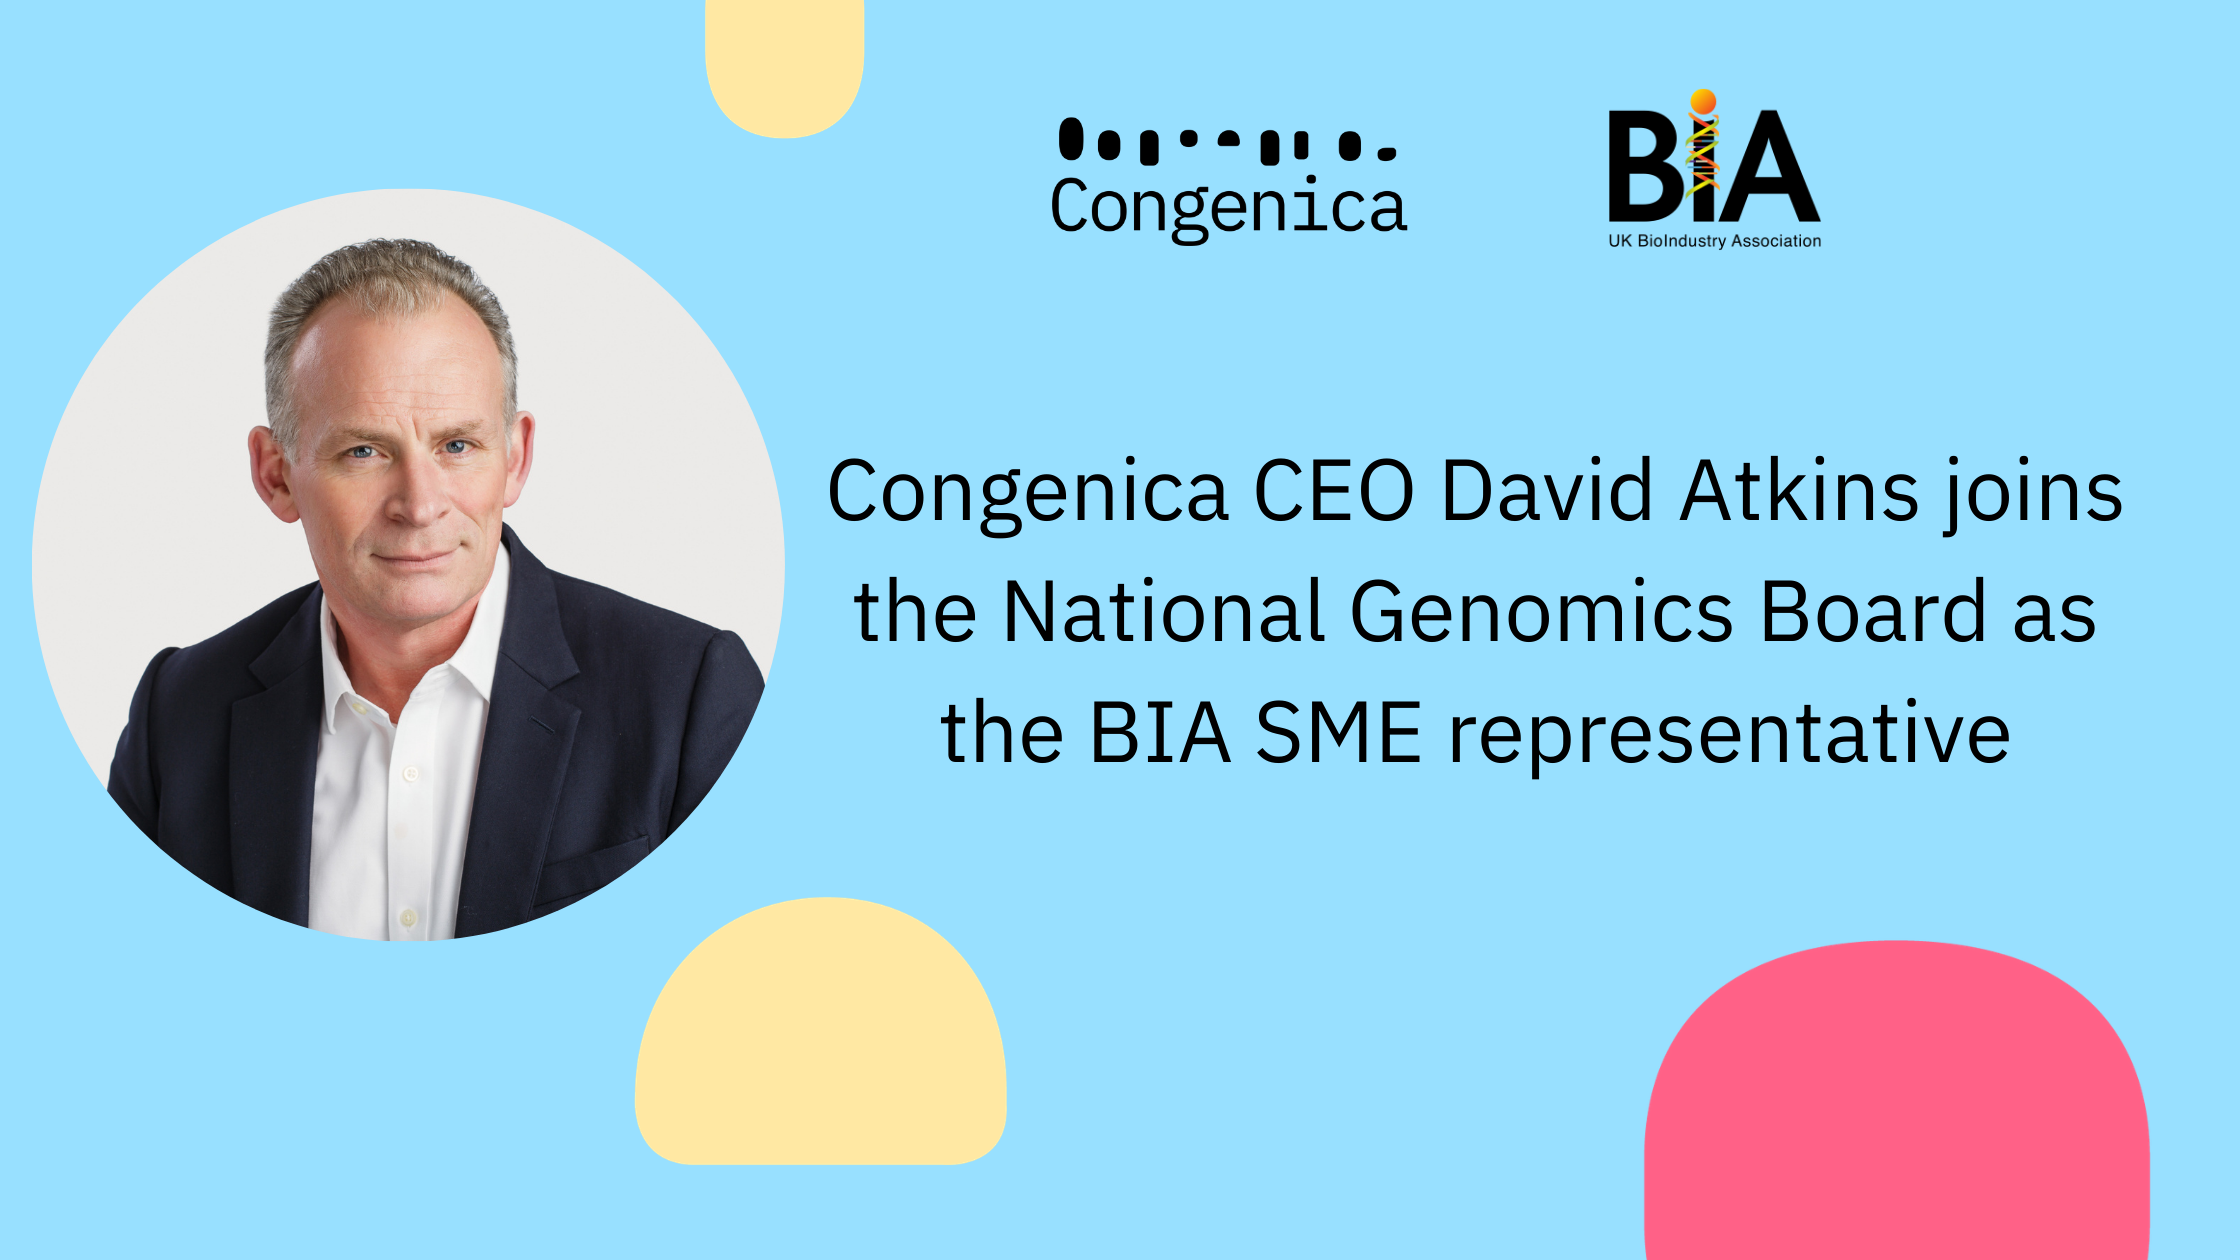 David Atkins joins the National Genomics Board as BIA SME representative